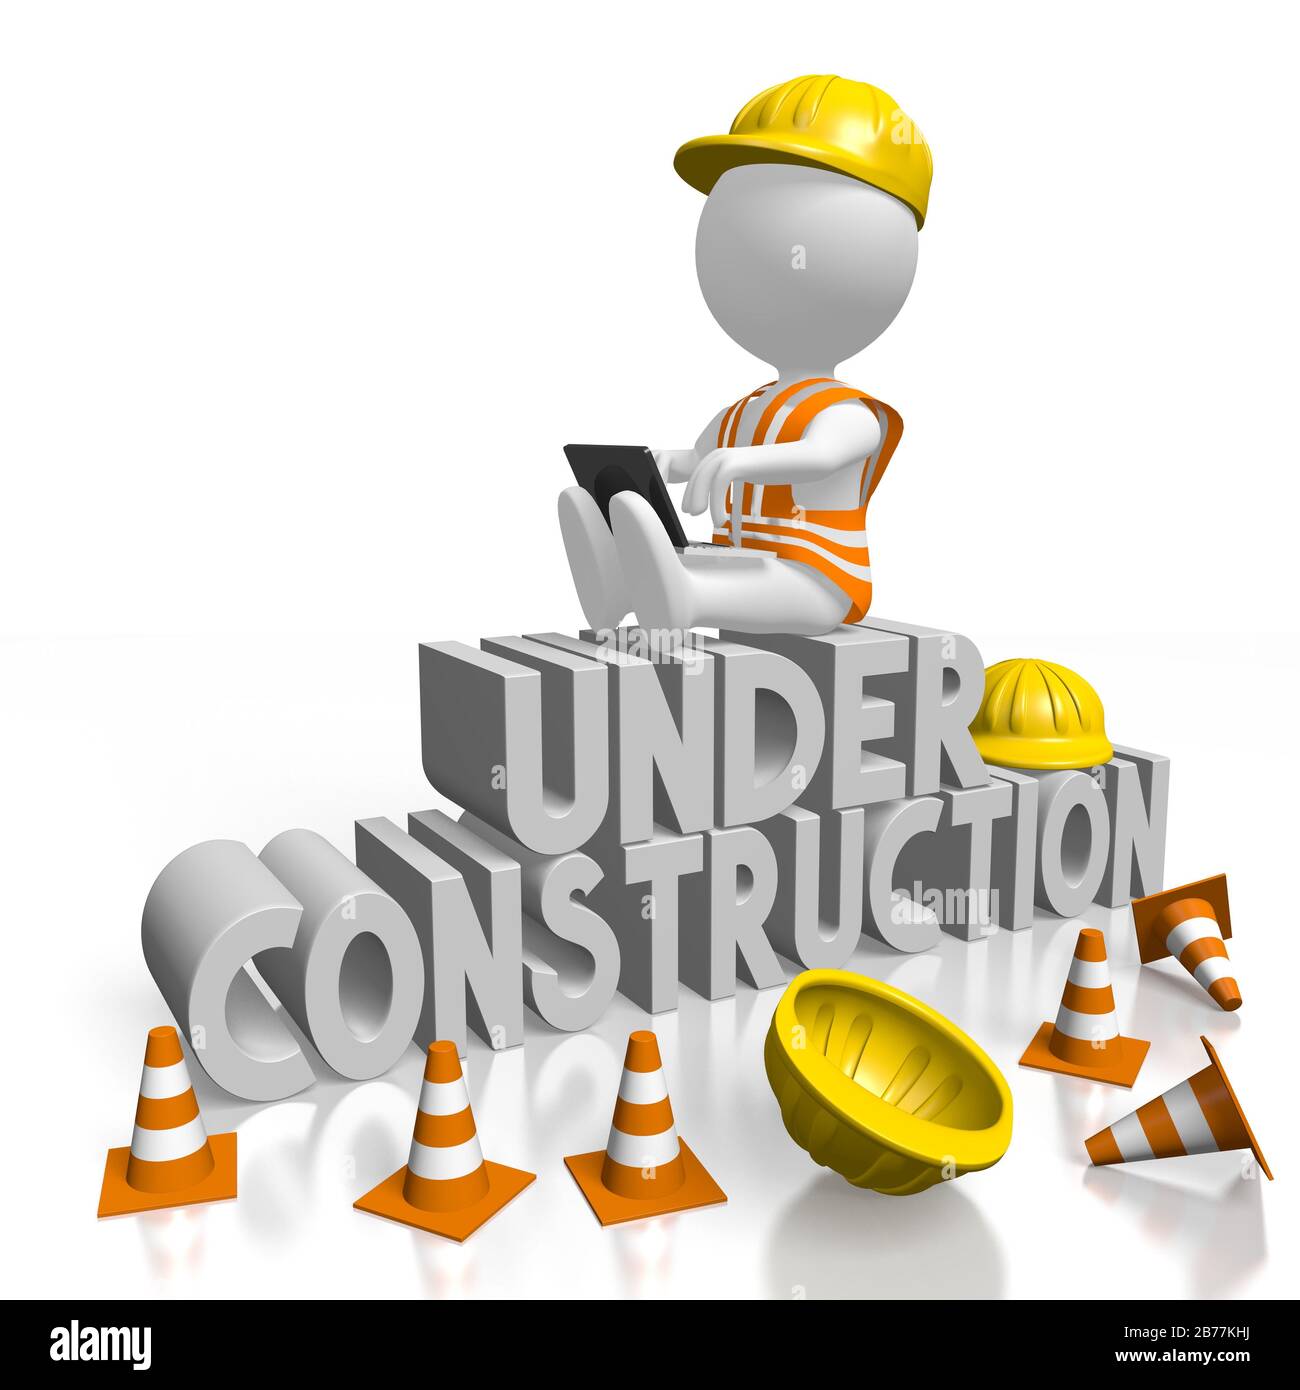 Under Construction –